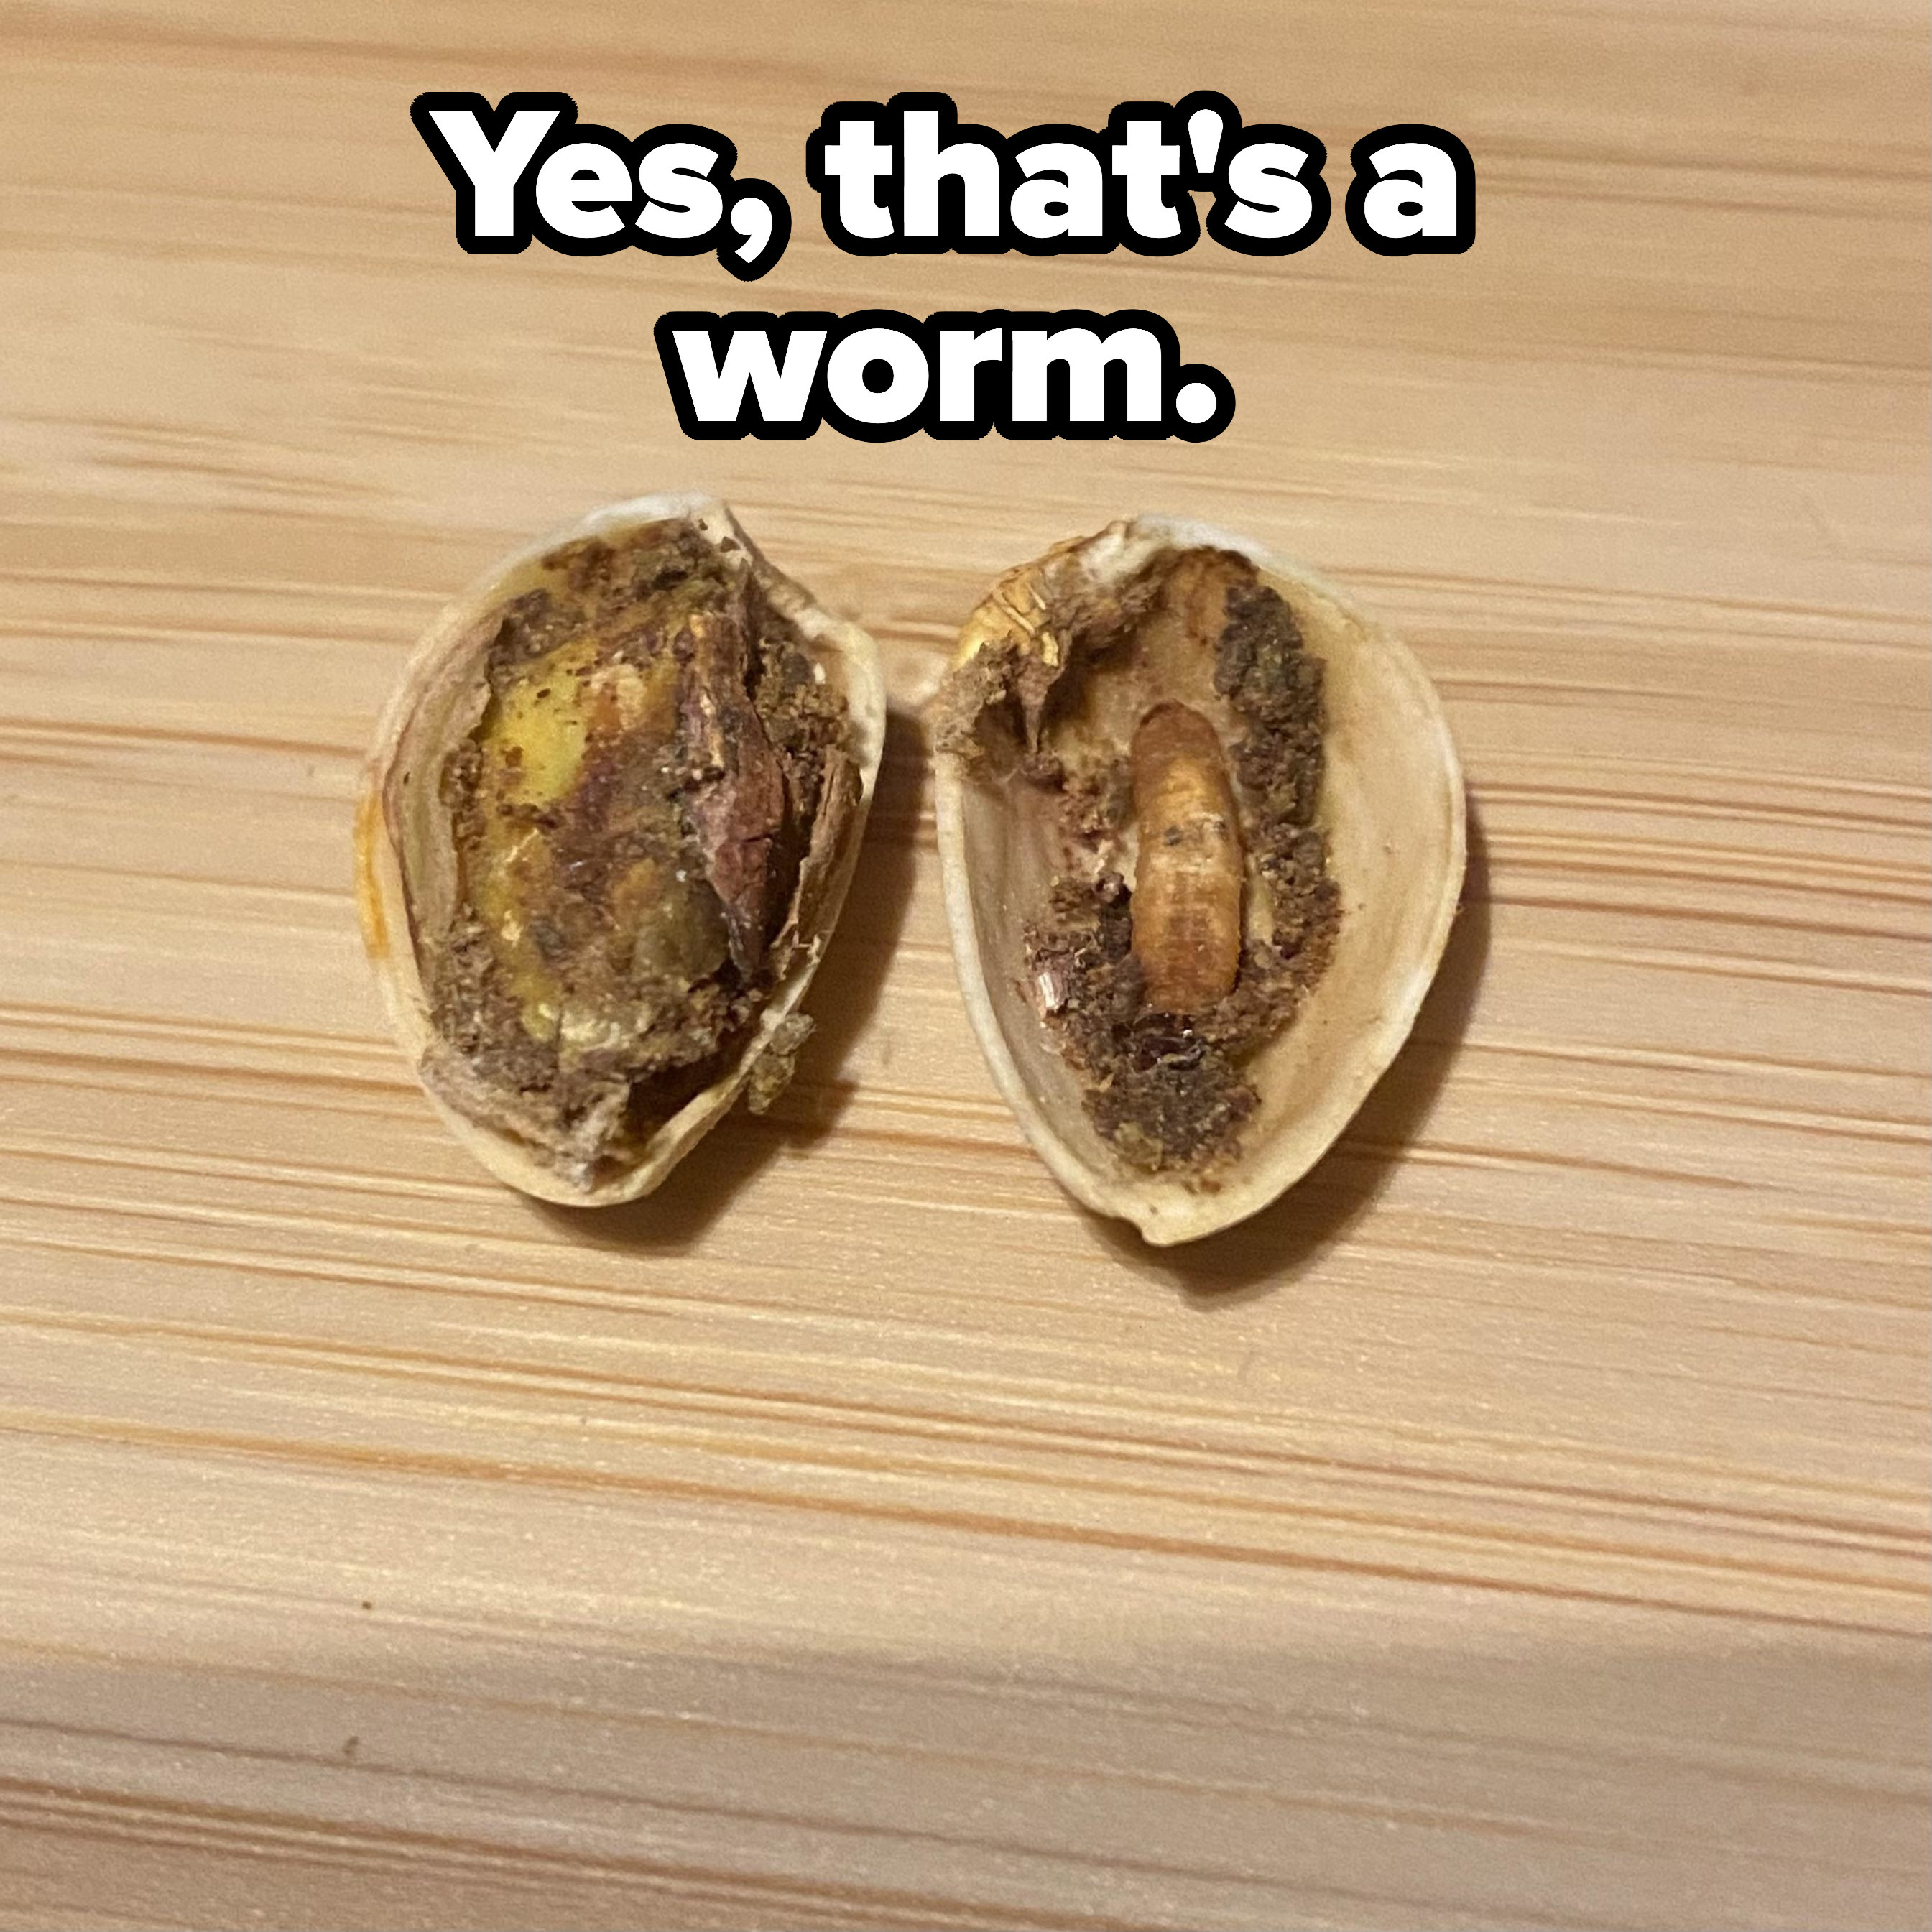 A worm inside a pistachio shell